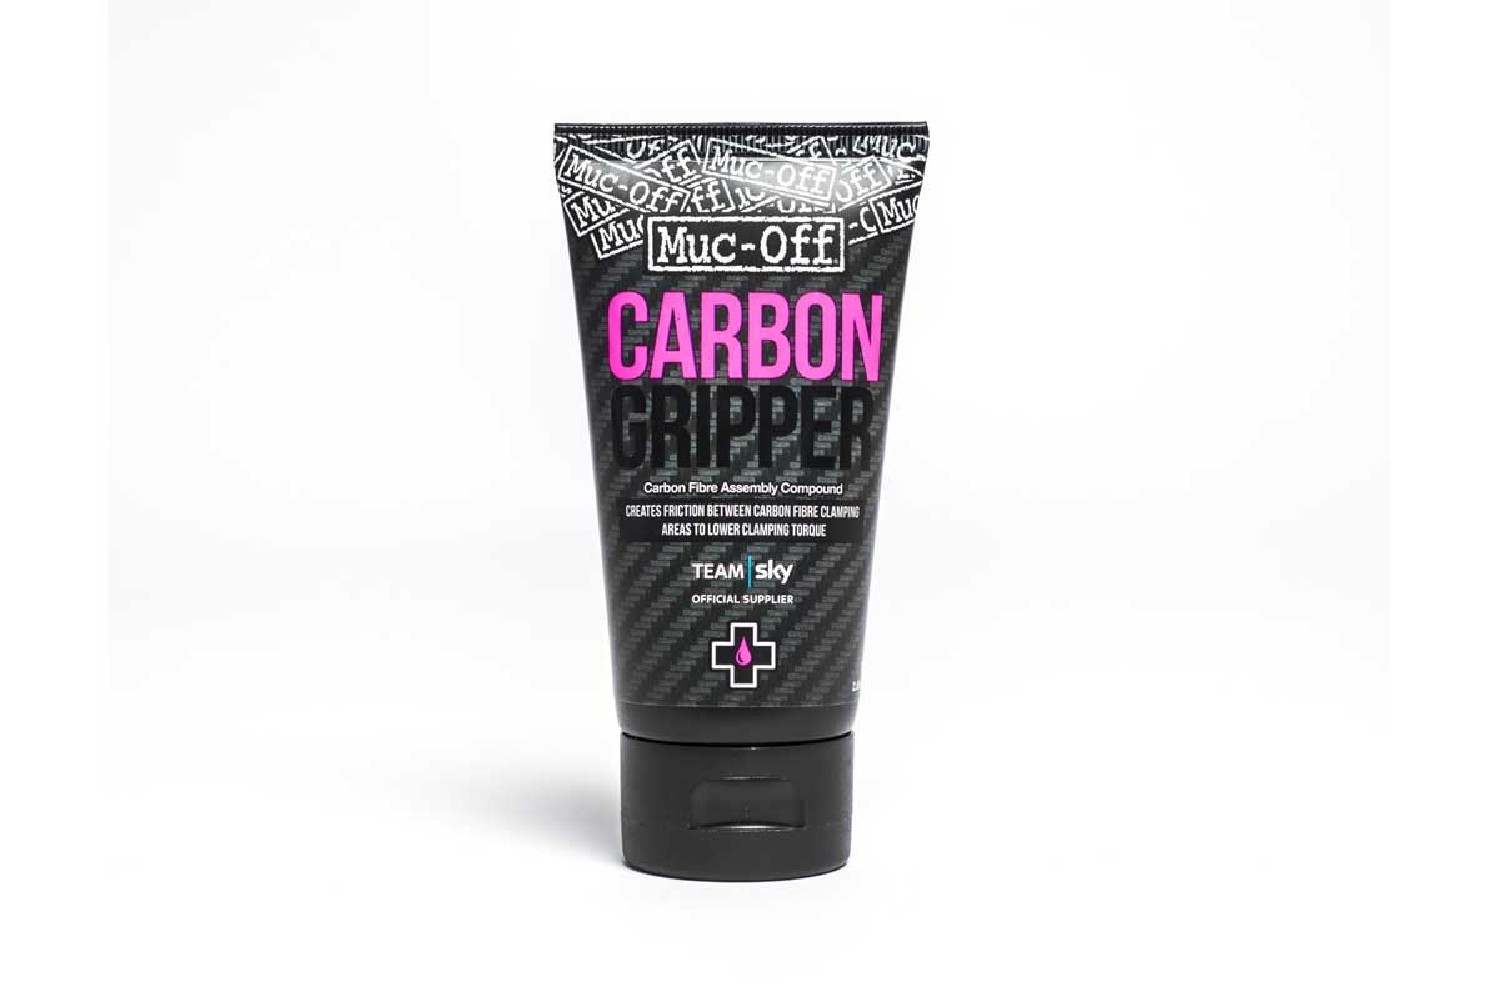 Pasta Carbon Muc-Off Carbon Gripper 75g.